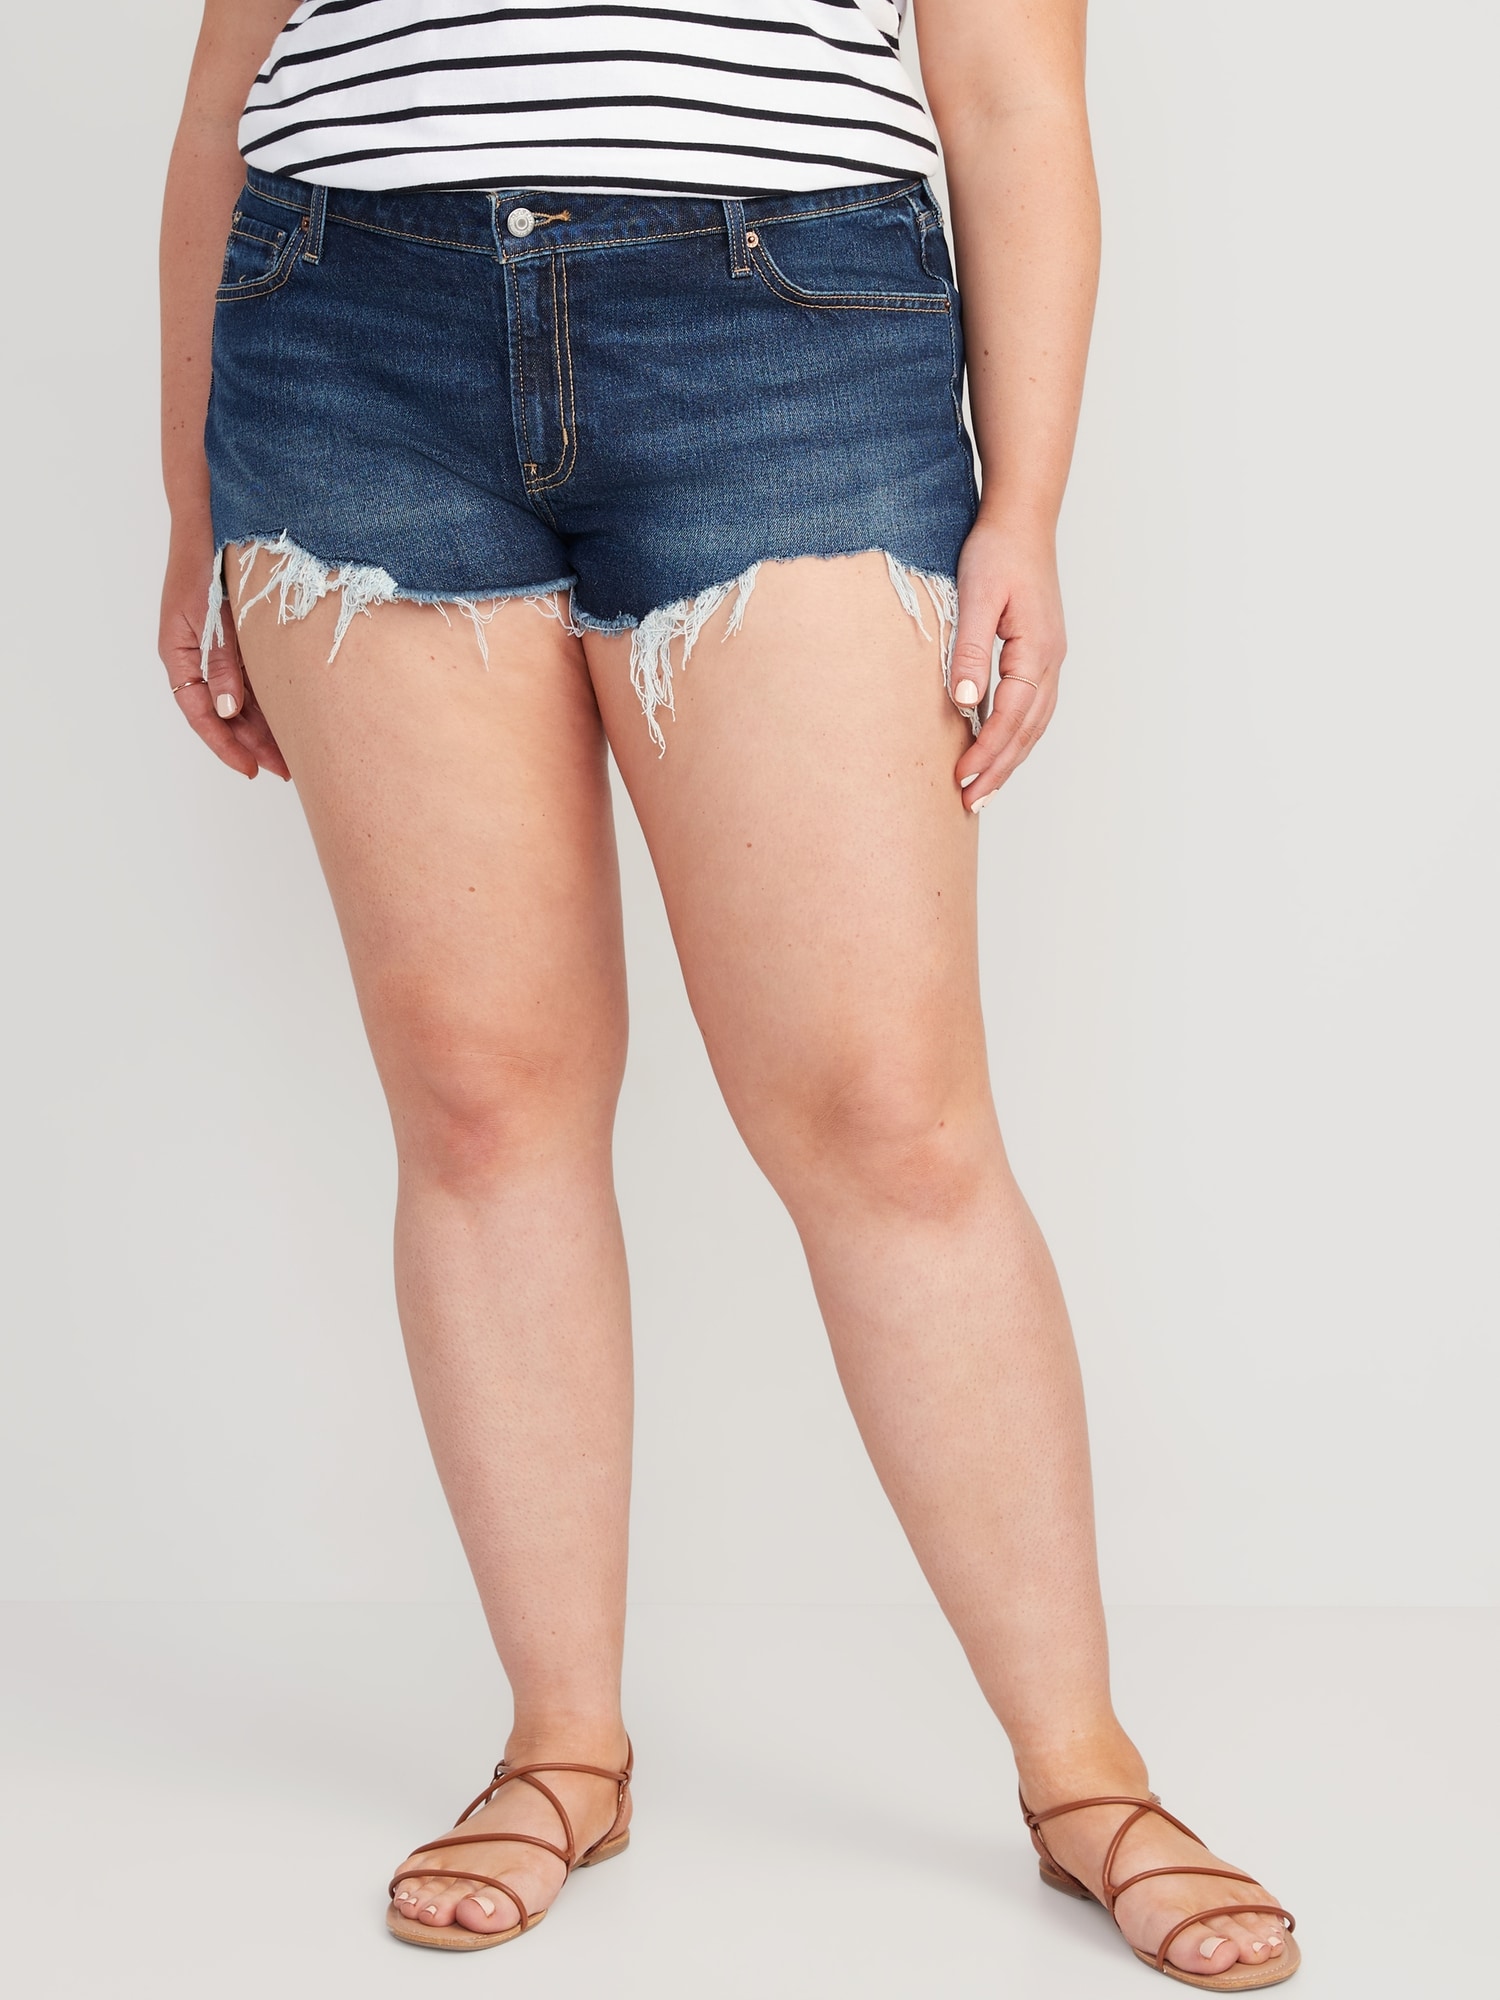 Low-Rise OG Straight Super-Short Cut-Off Jean Shorts -- 1.5-inch